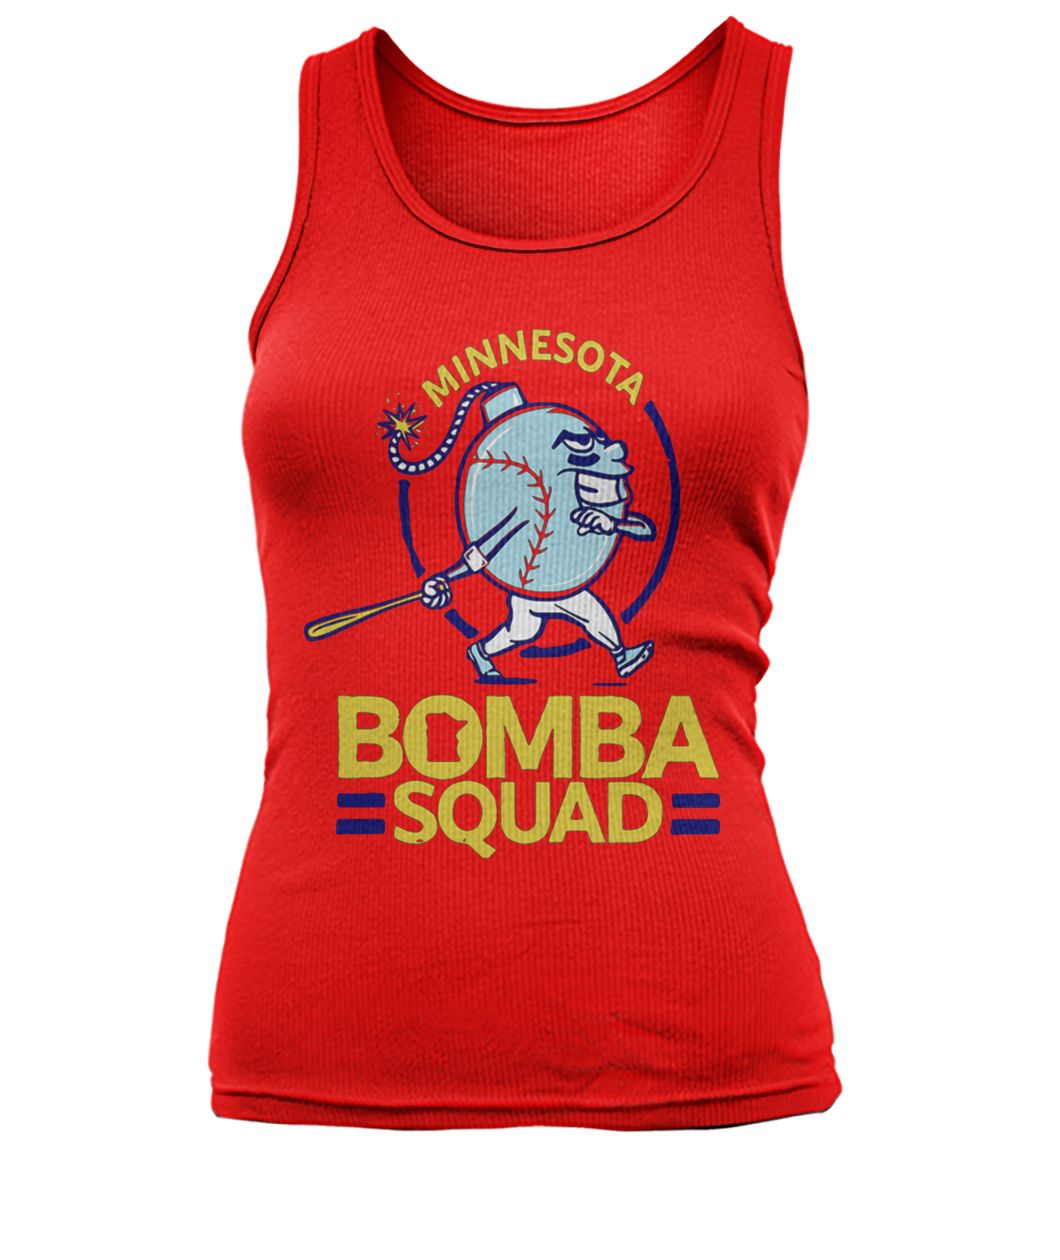 Minnesota bomba squad women's tank top